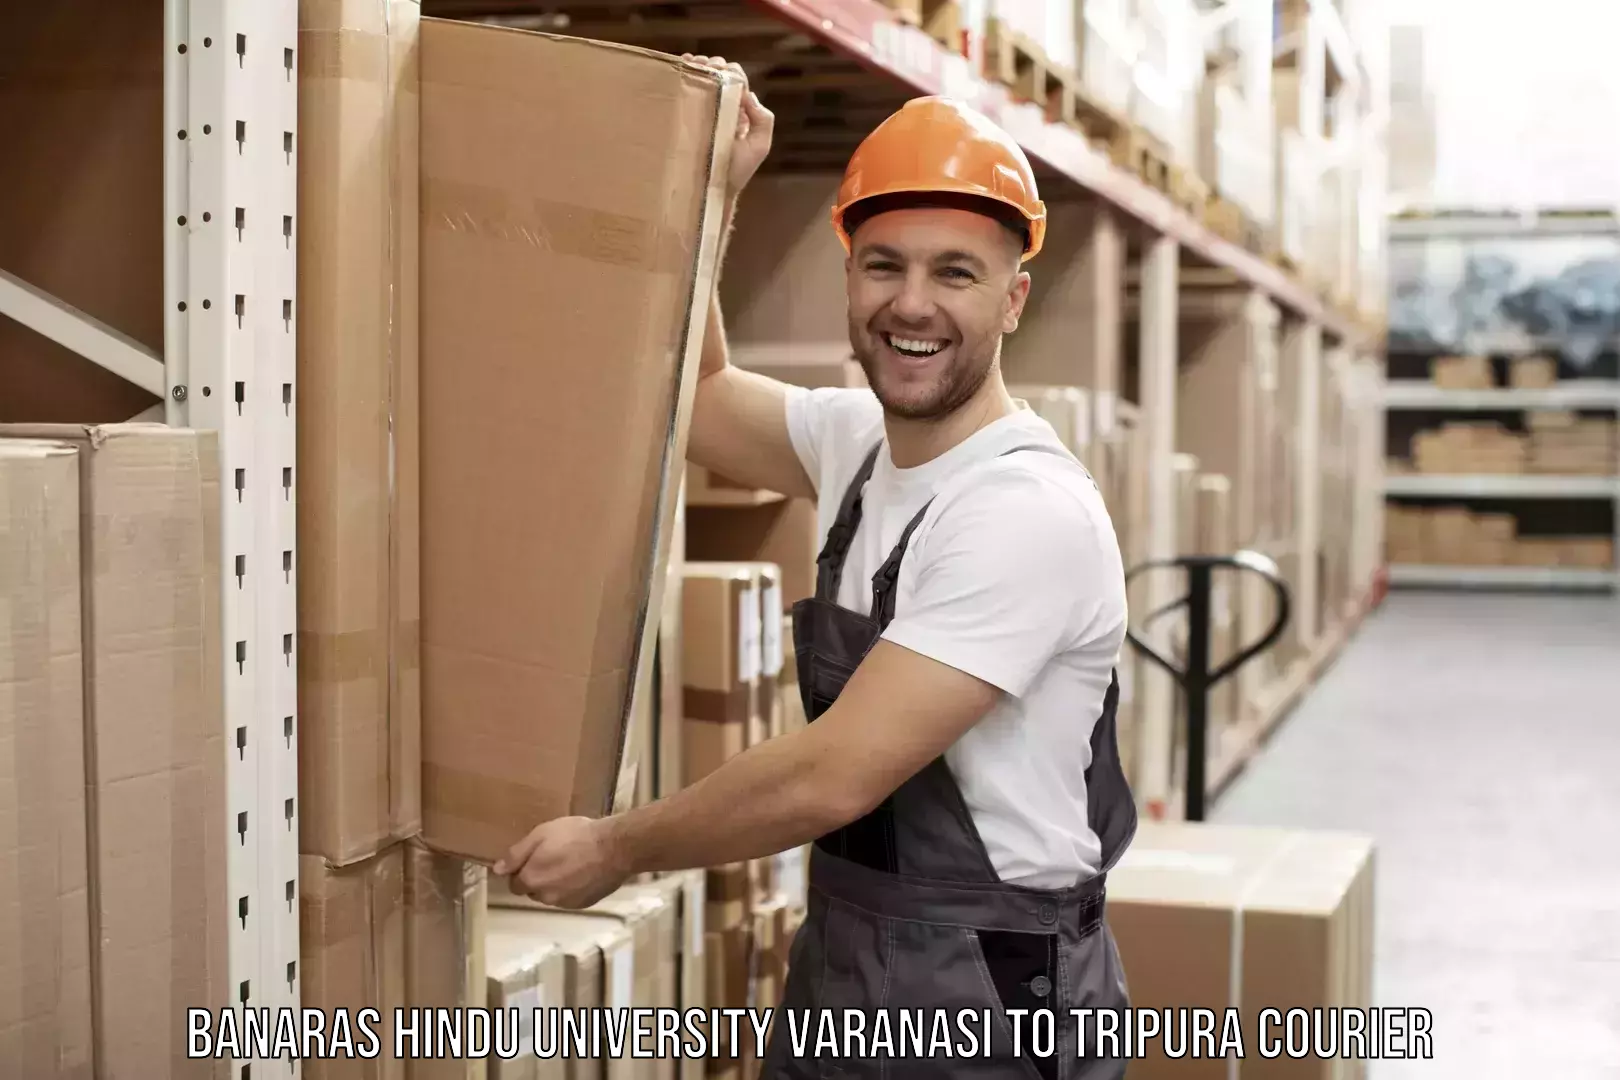 Skilled furniture transporters Banaras Hindu University Varanasi to Tripura